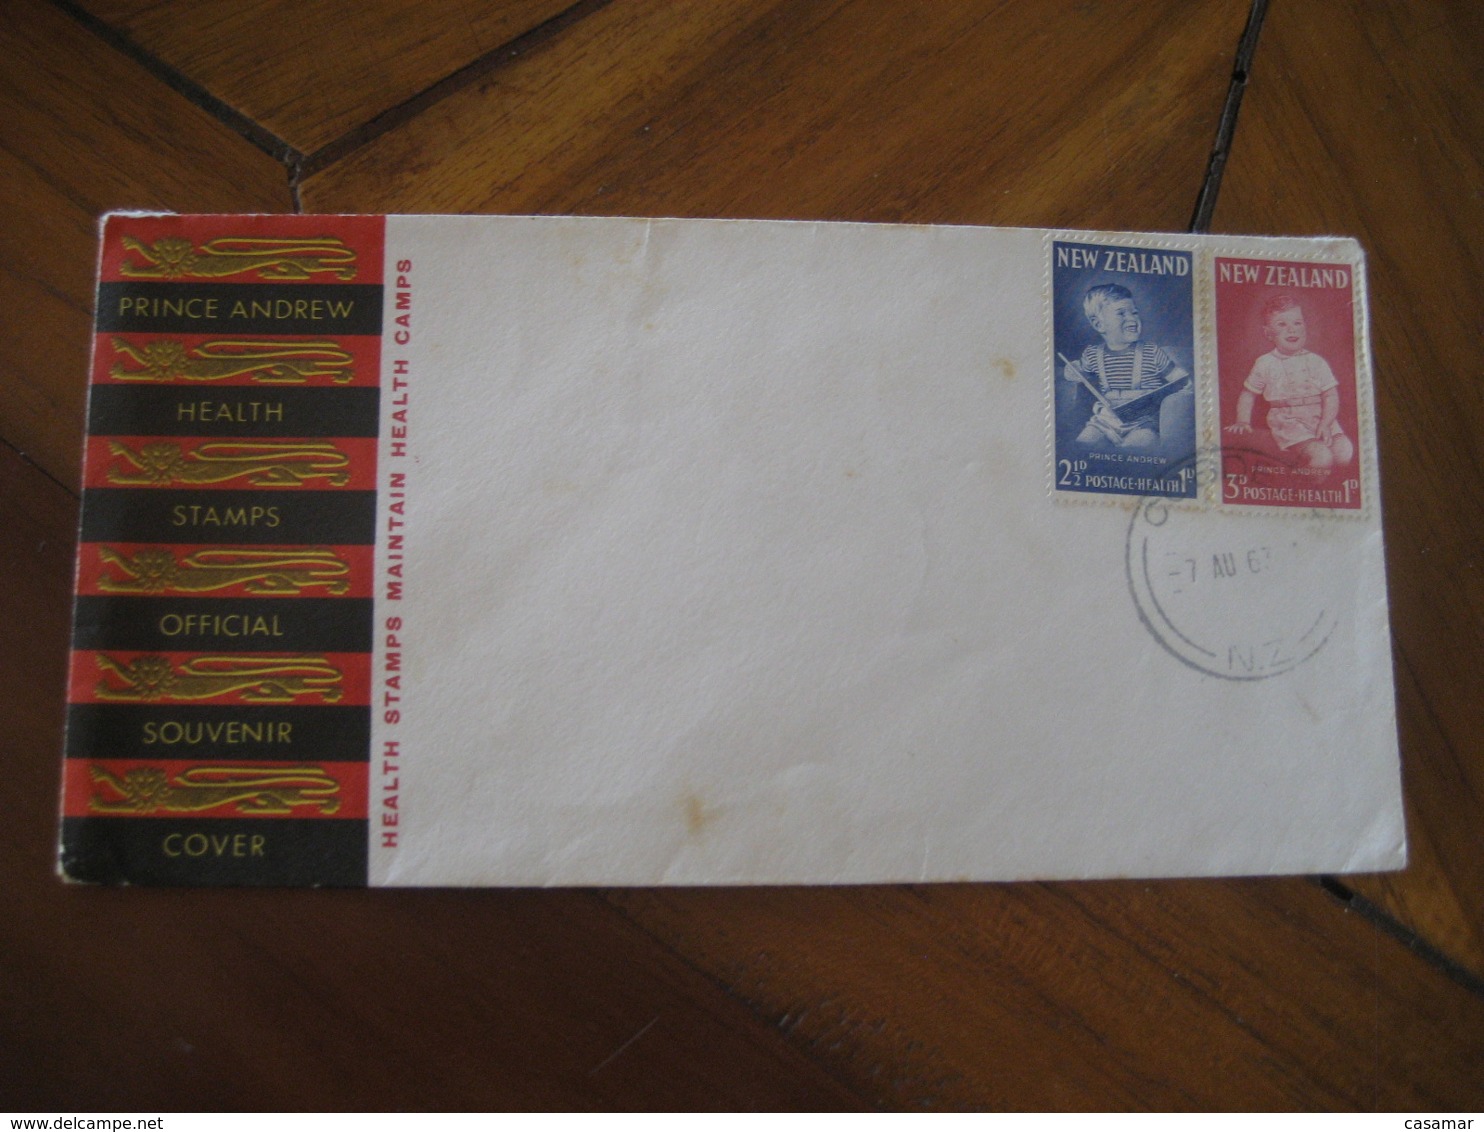 Prince Andrew 1963 Health Stamps Official Souvenir Cancel Cover NEW ZEALAND - Cartas & Documentos